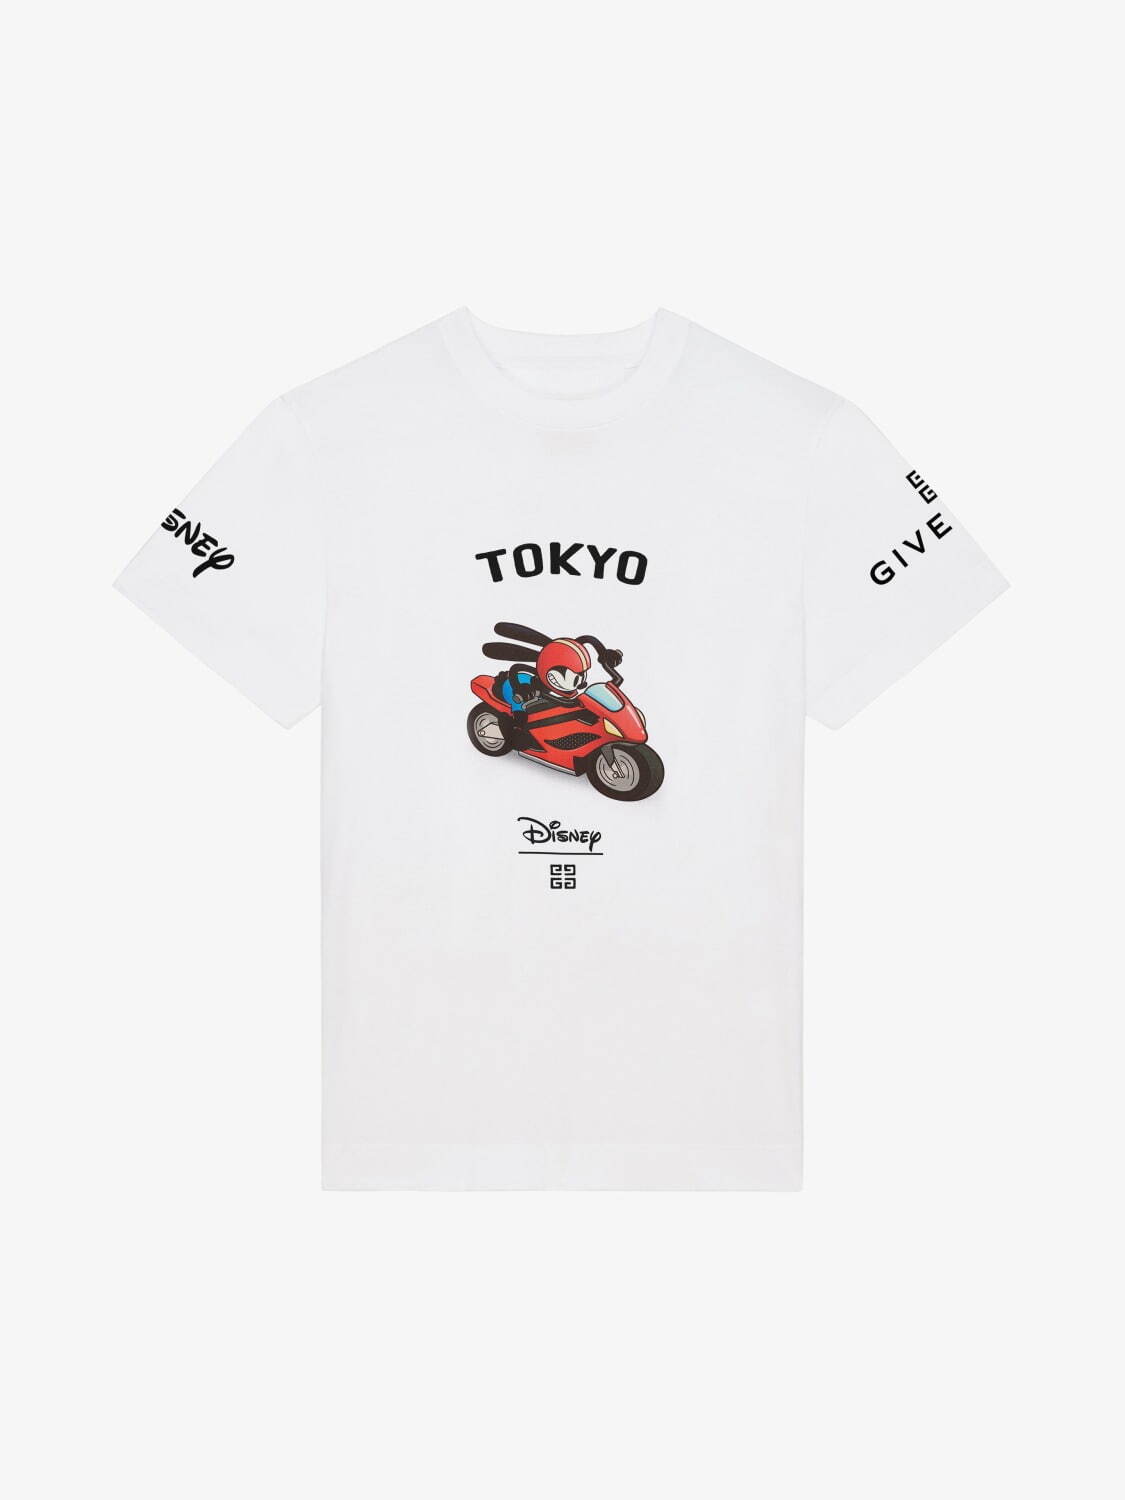 TOKYO Tシャツ(日本限定) 119,900円